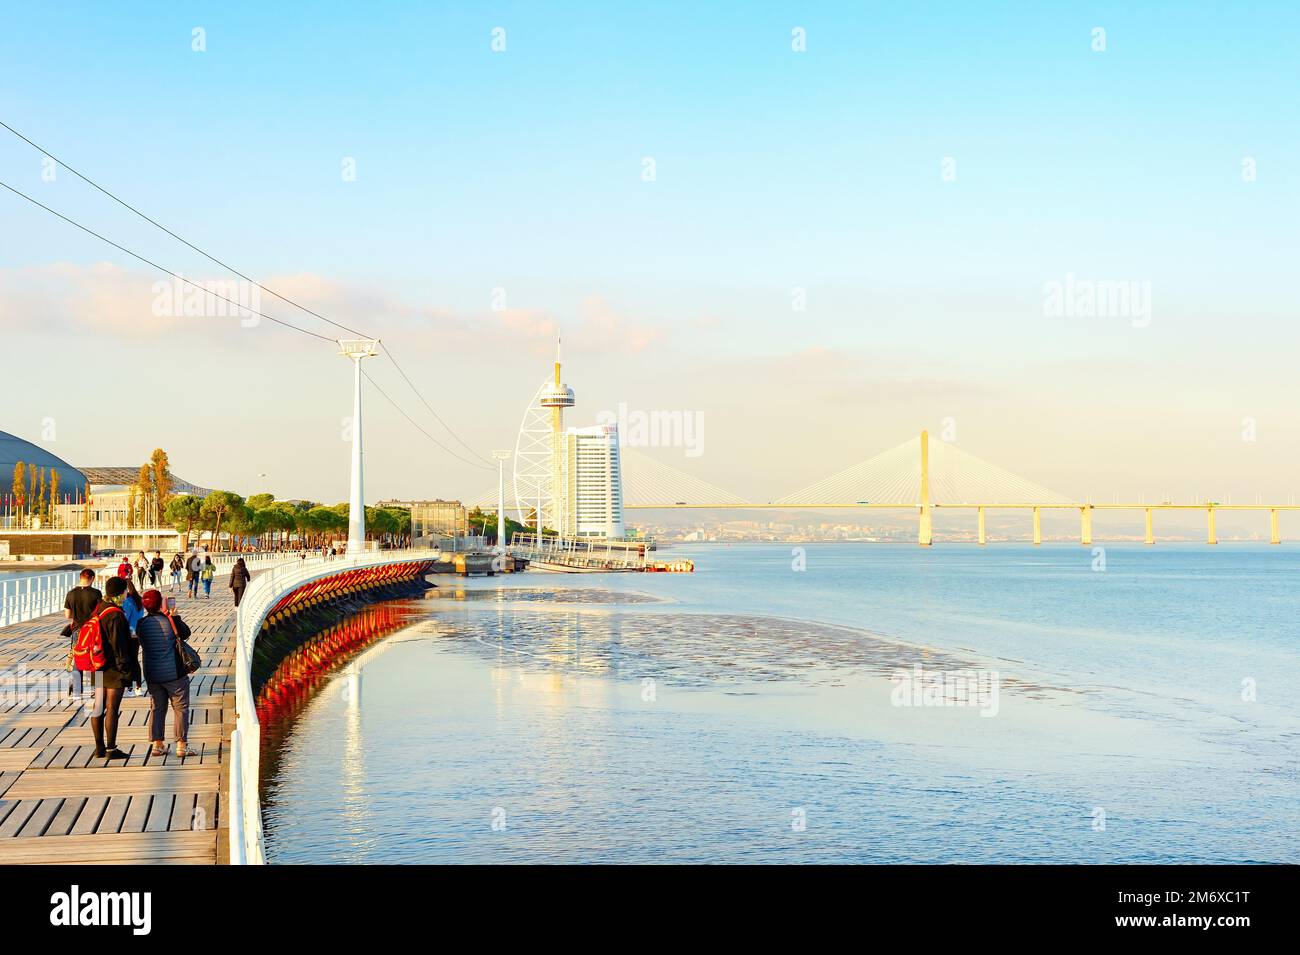 Architettura moderna ponte Promenade Lisbona Foto Stock